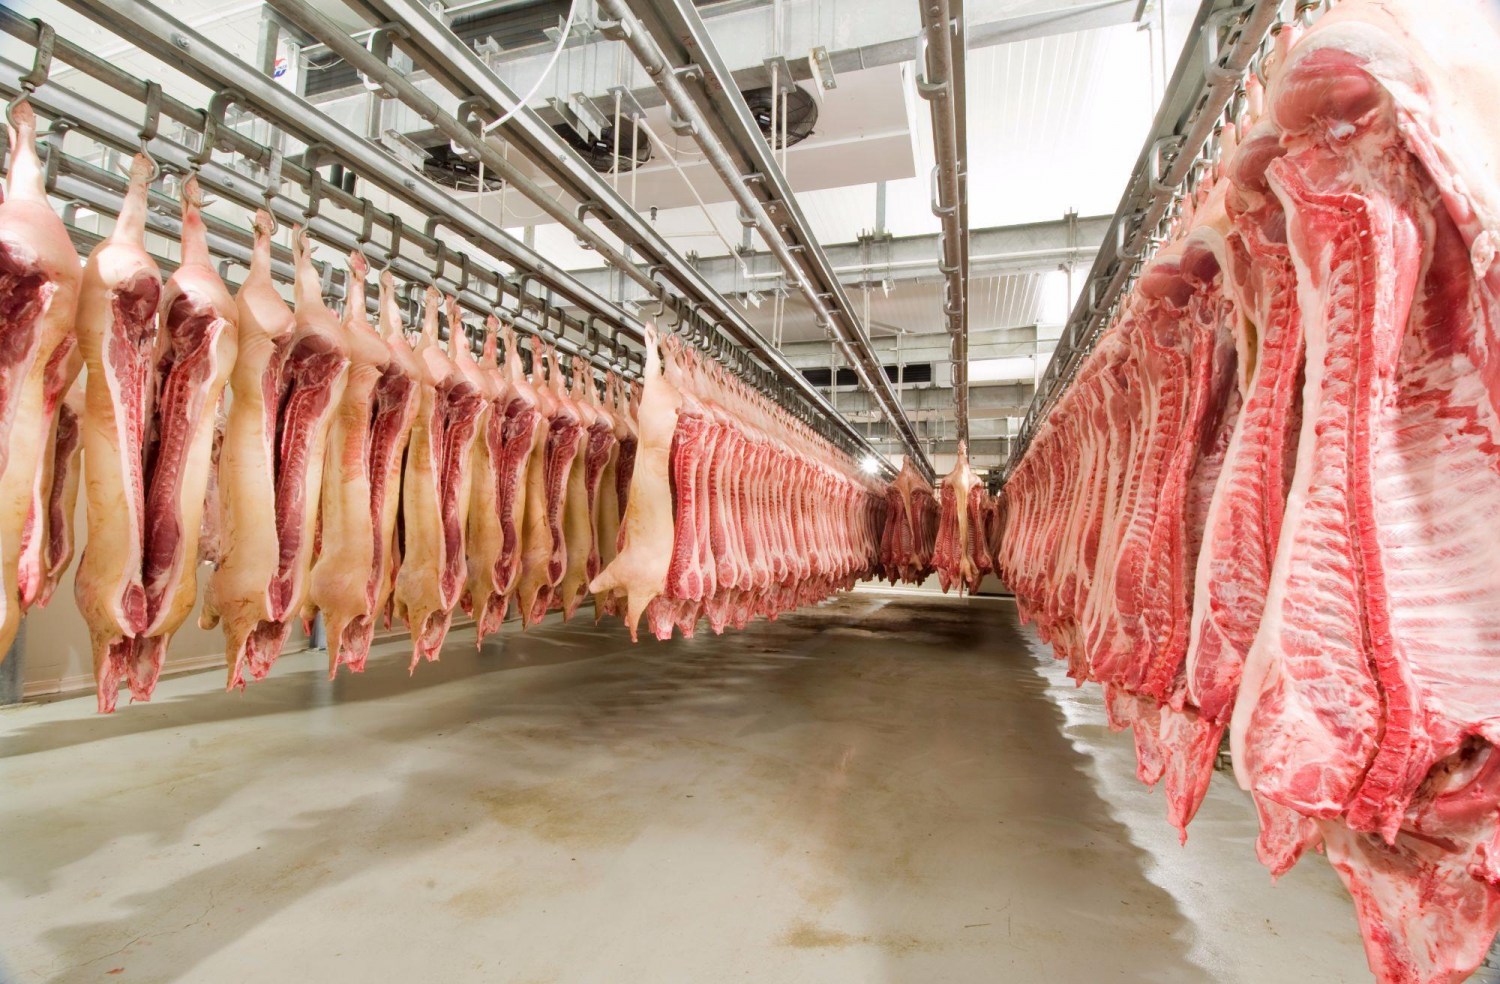 Carne suína perde competitividade frente às substitutas